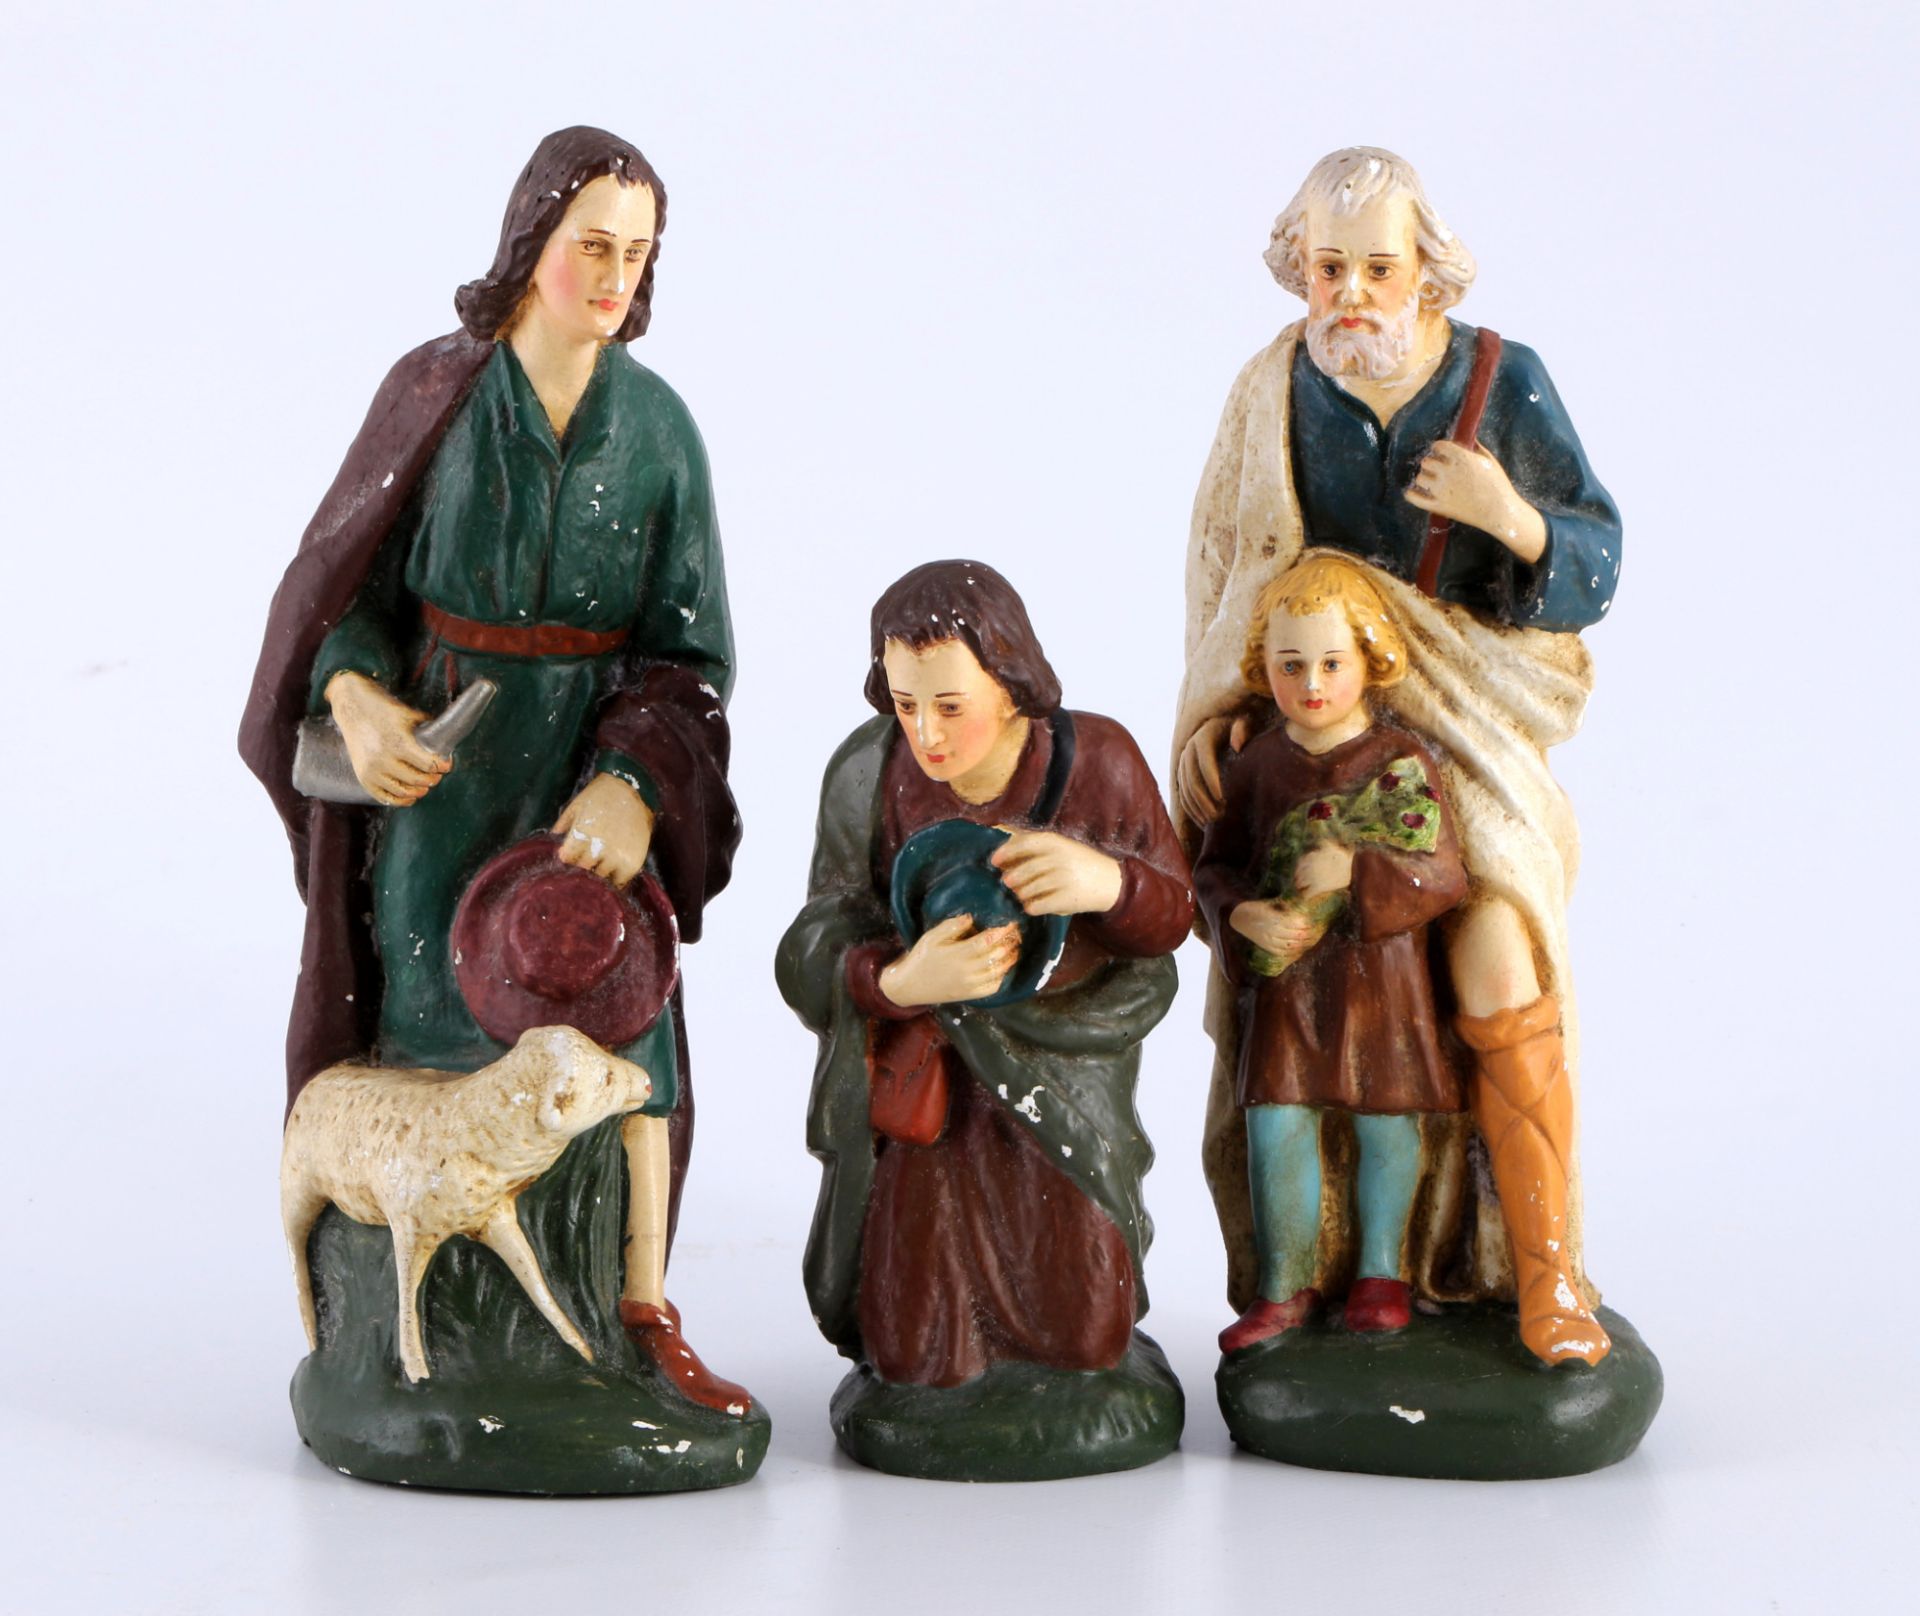 Nativity figure collection 18-piece, monogrammed J.ST., Krippenfiguren Sammlung, - Image 4 of 6